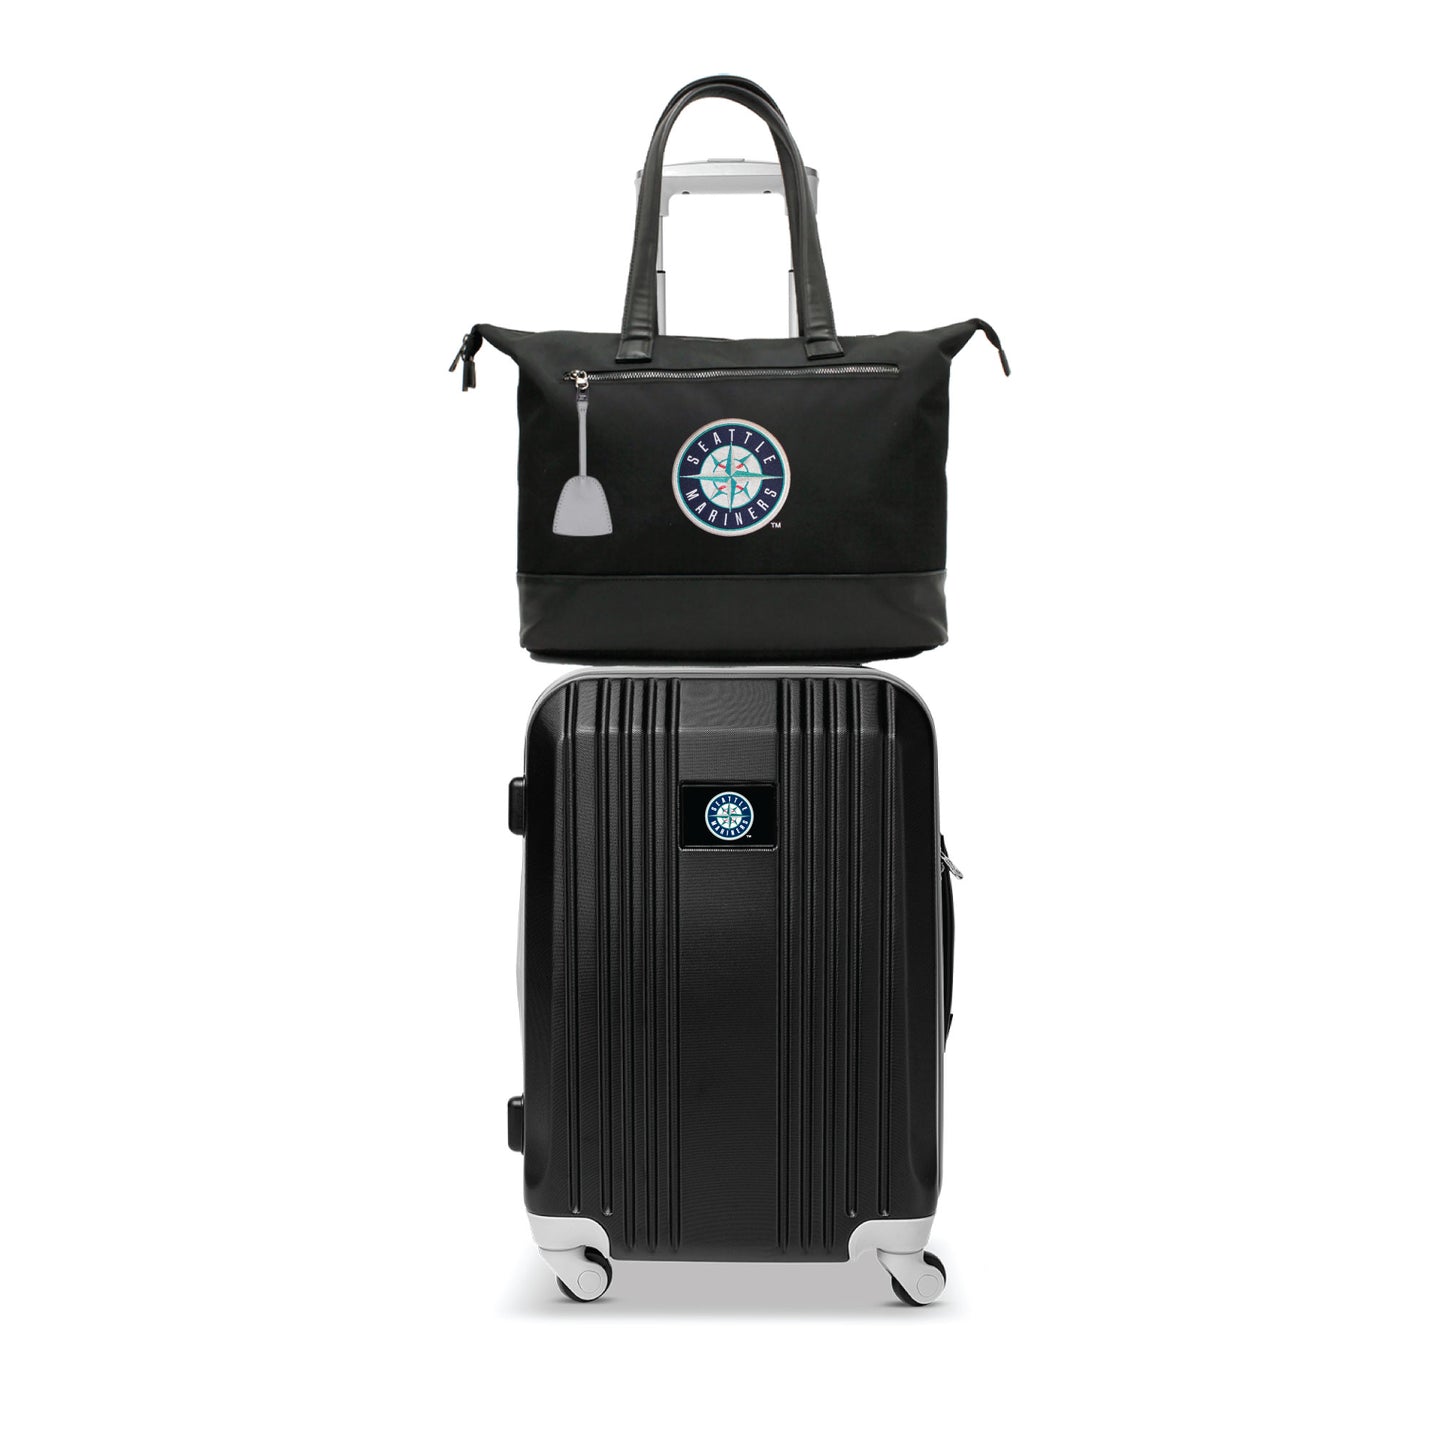 Seattle Mariners Premium Laptop Tote Bag and Luggage Set